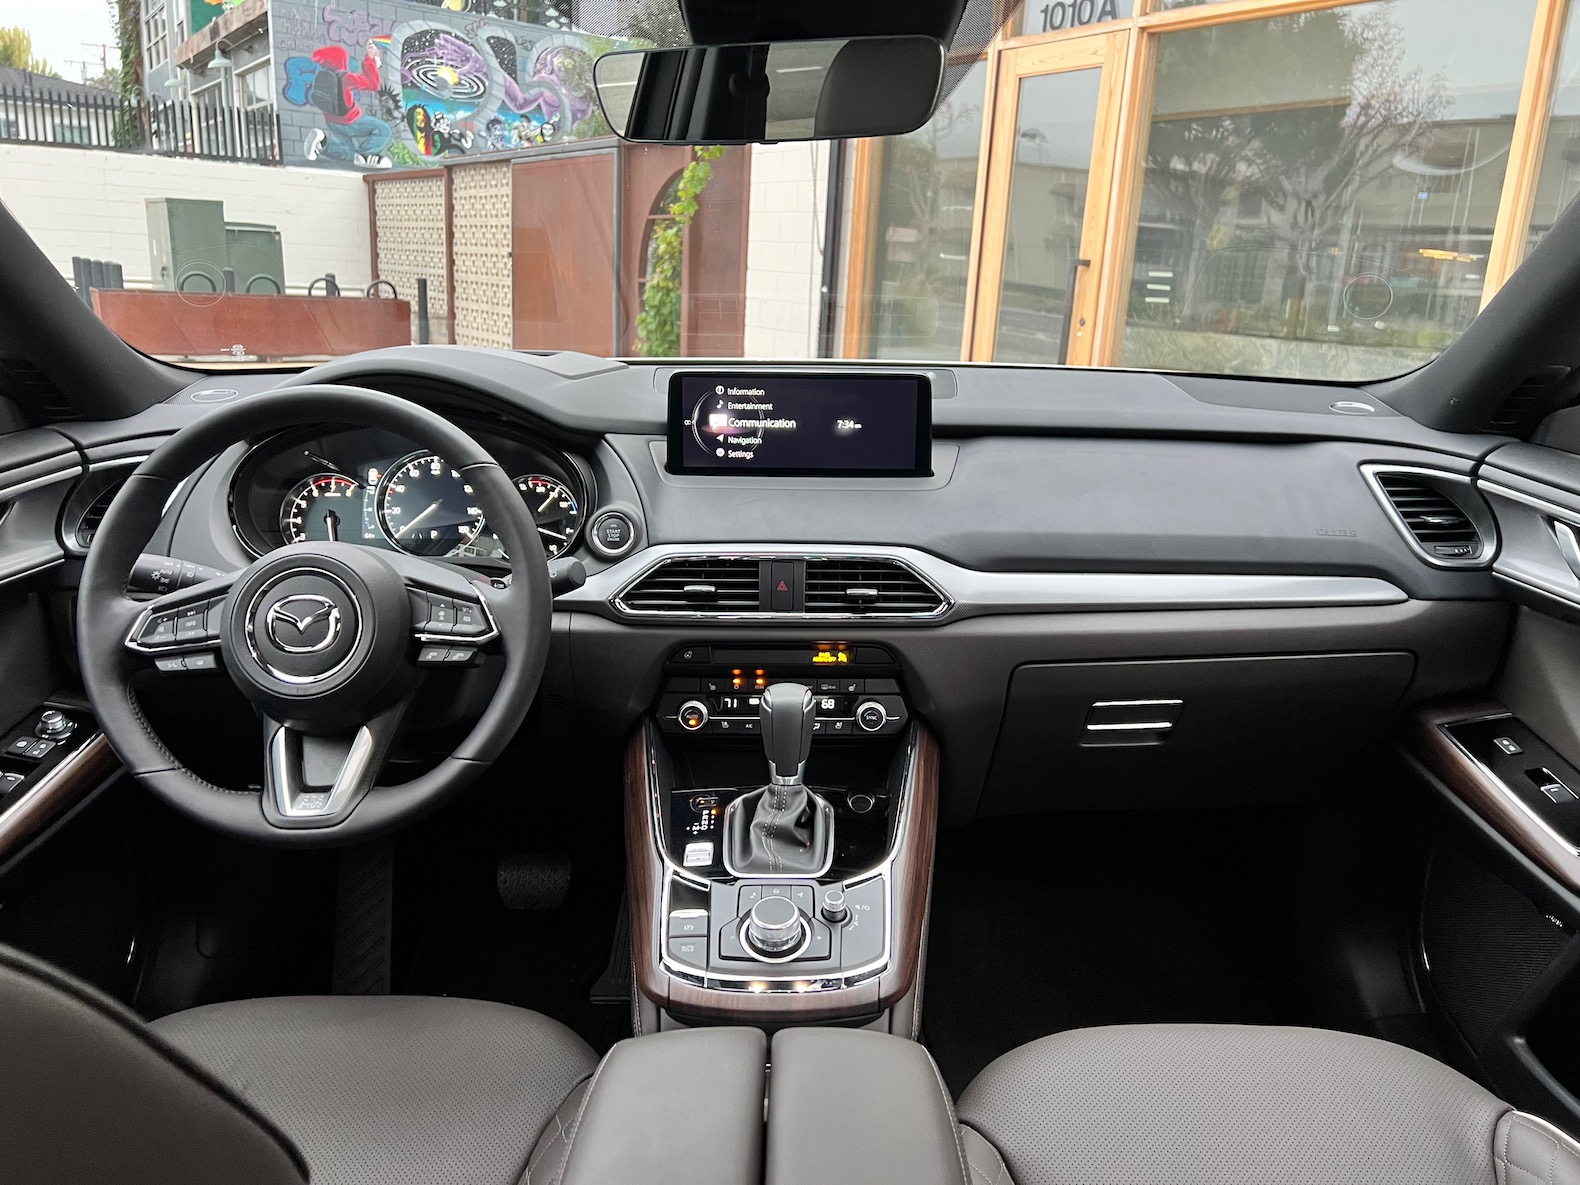 2023 Mazda CX-9 Review: The Fun-to-Drive Three-Row SUV - The Torque Report